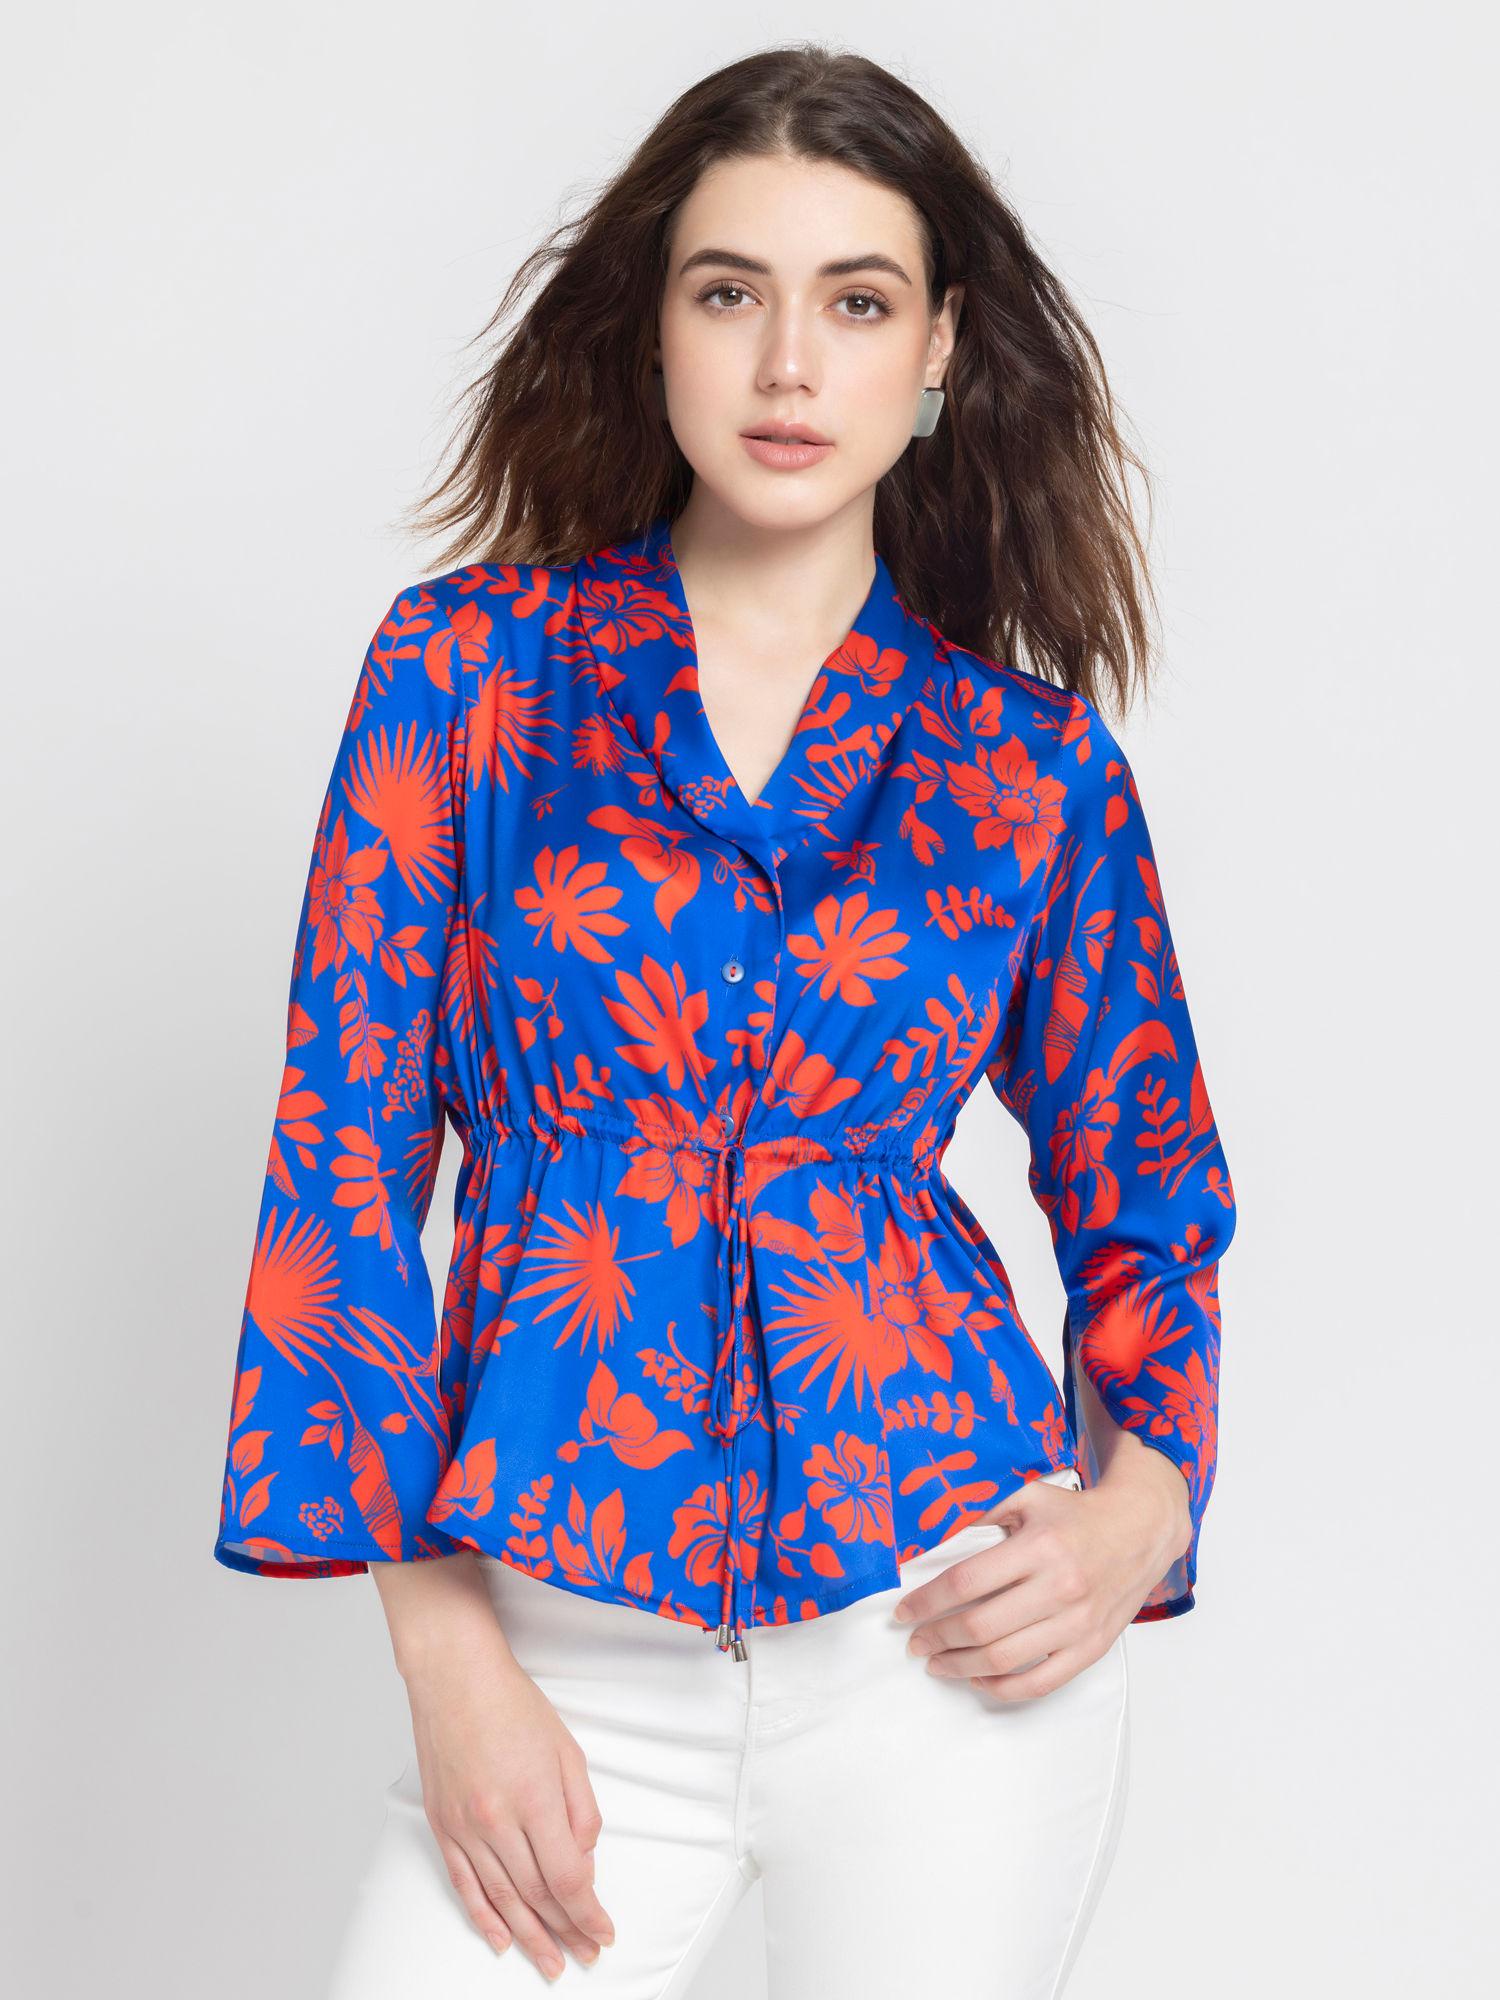 v-neck blue floral print three quarter sleeves casual shirt for women